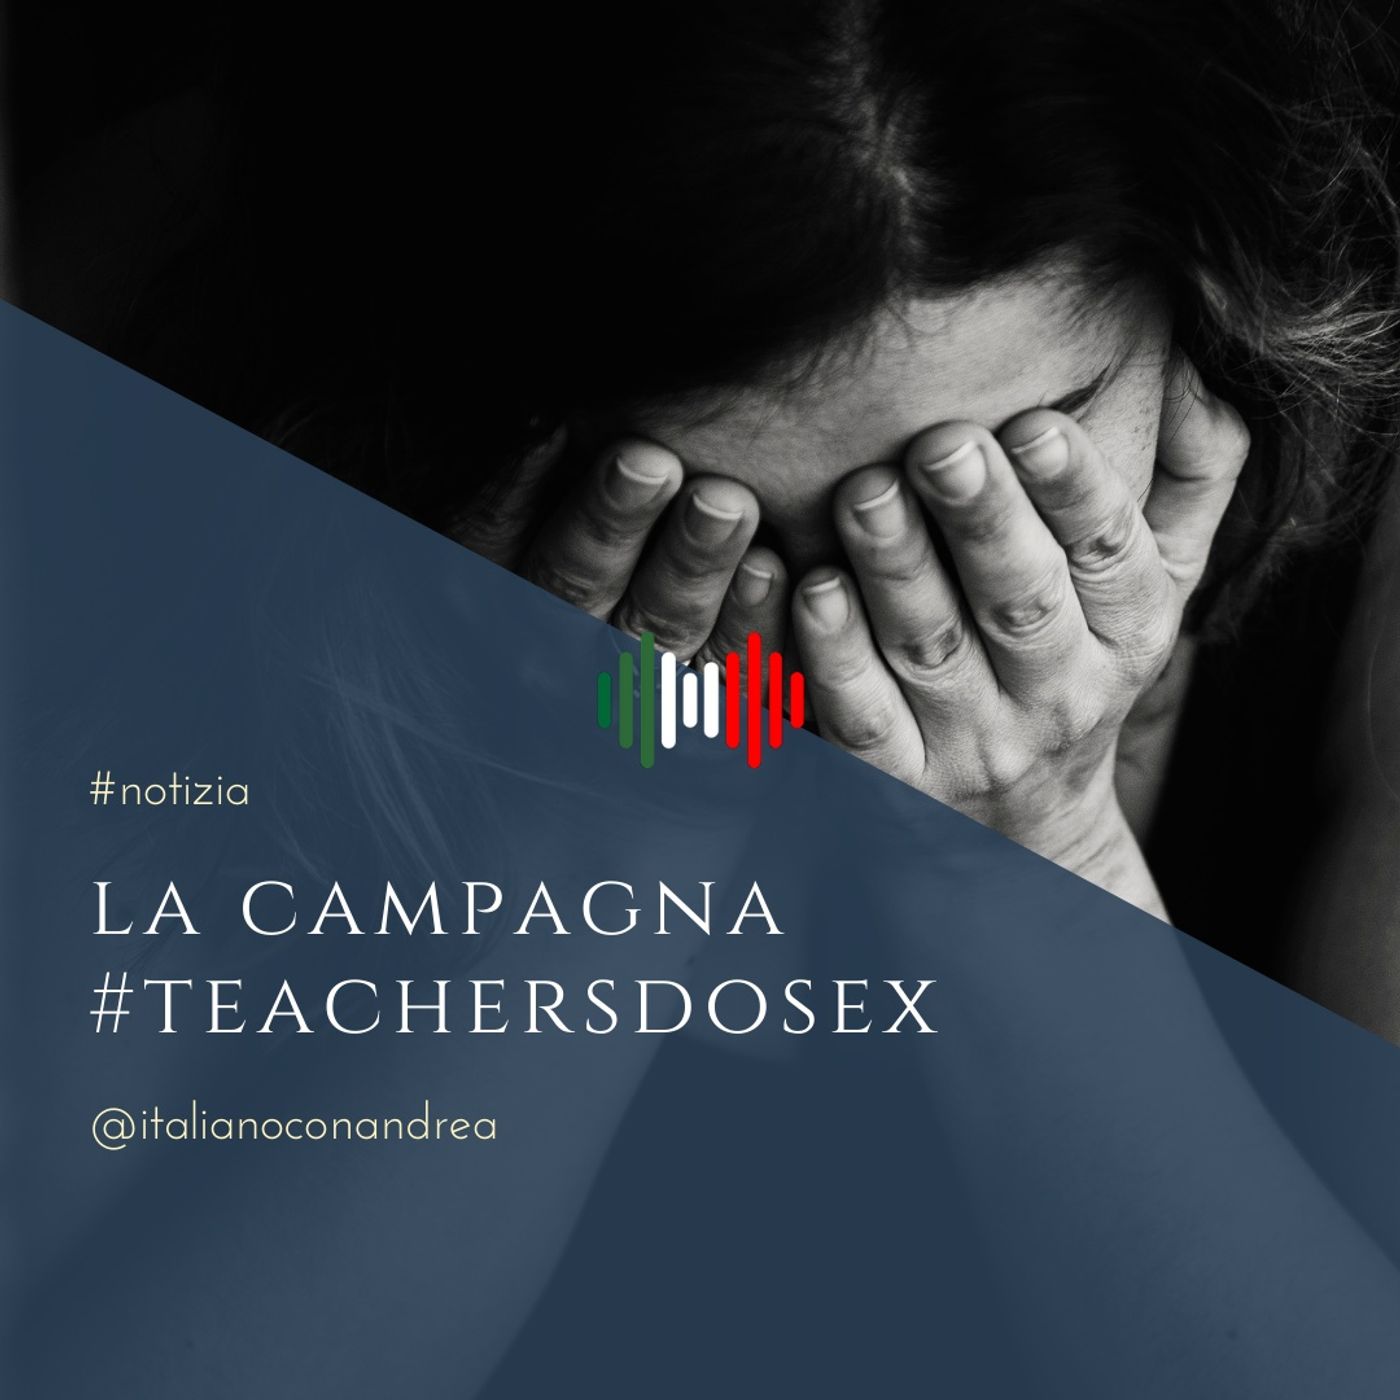 179. NOTIZIA: La campagna #teachersdosex